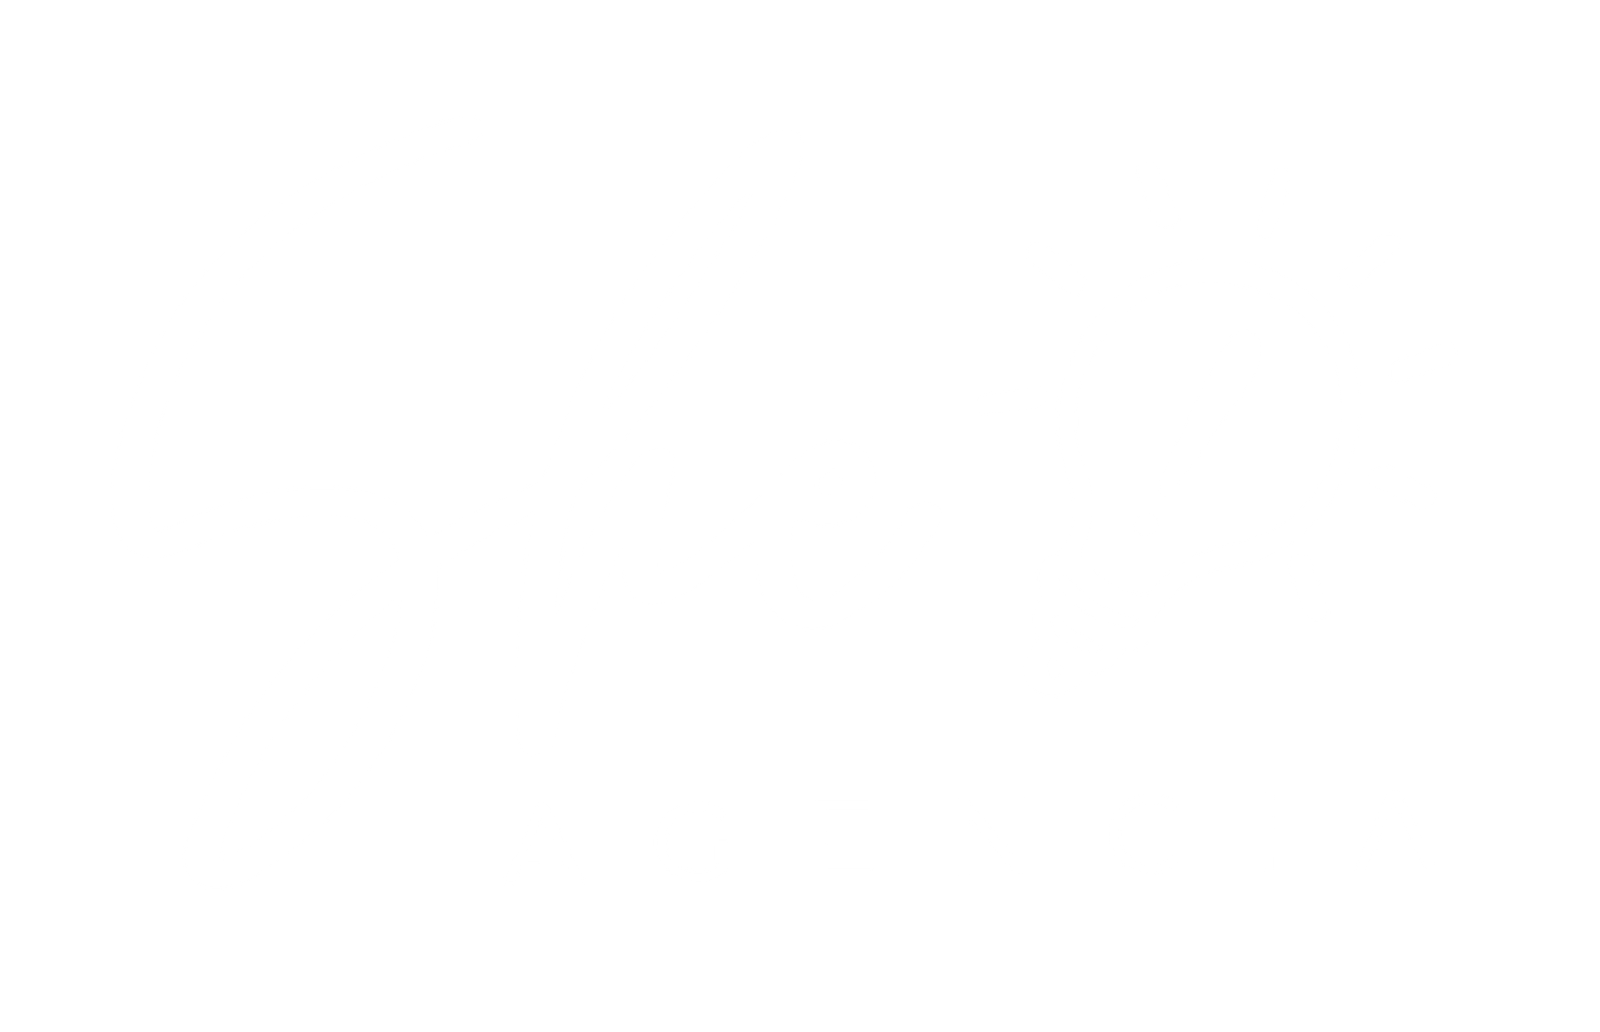 She Agencia Logo